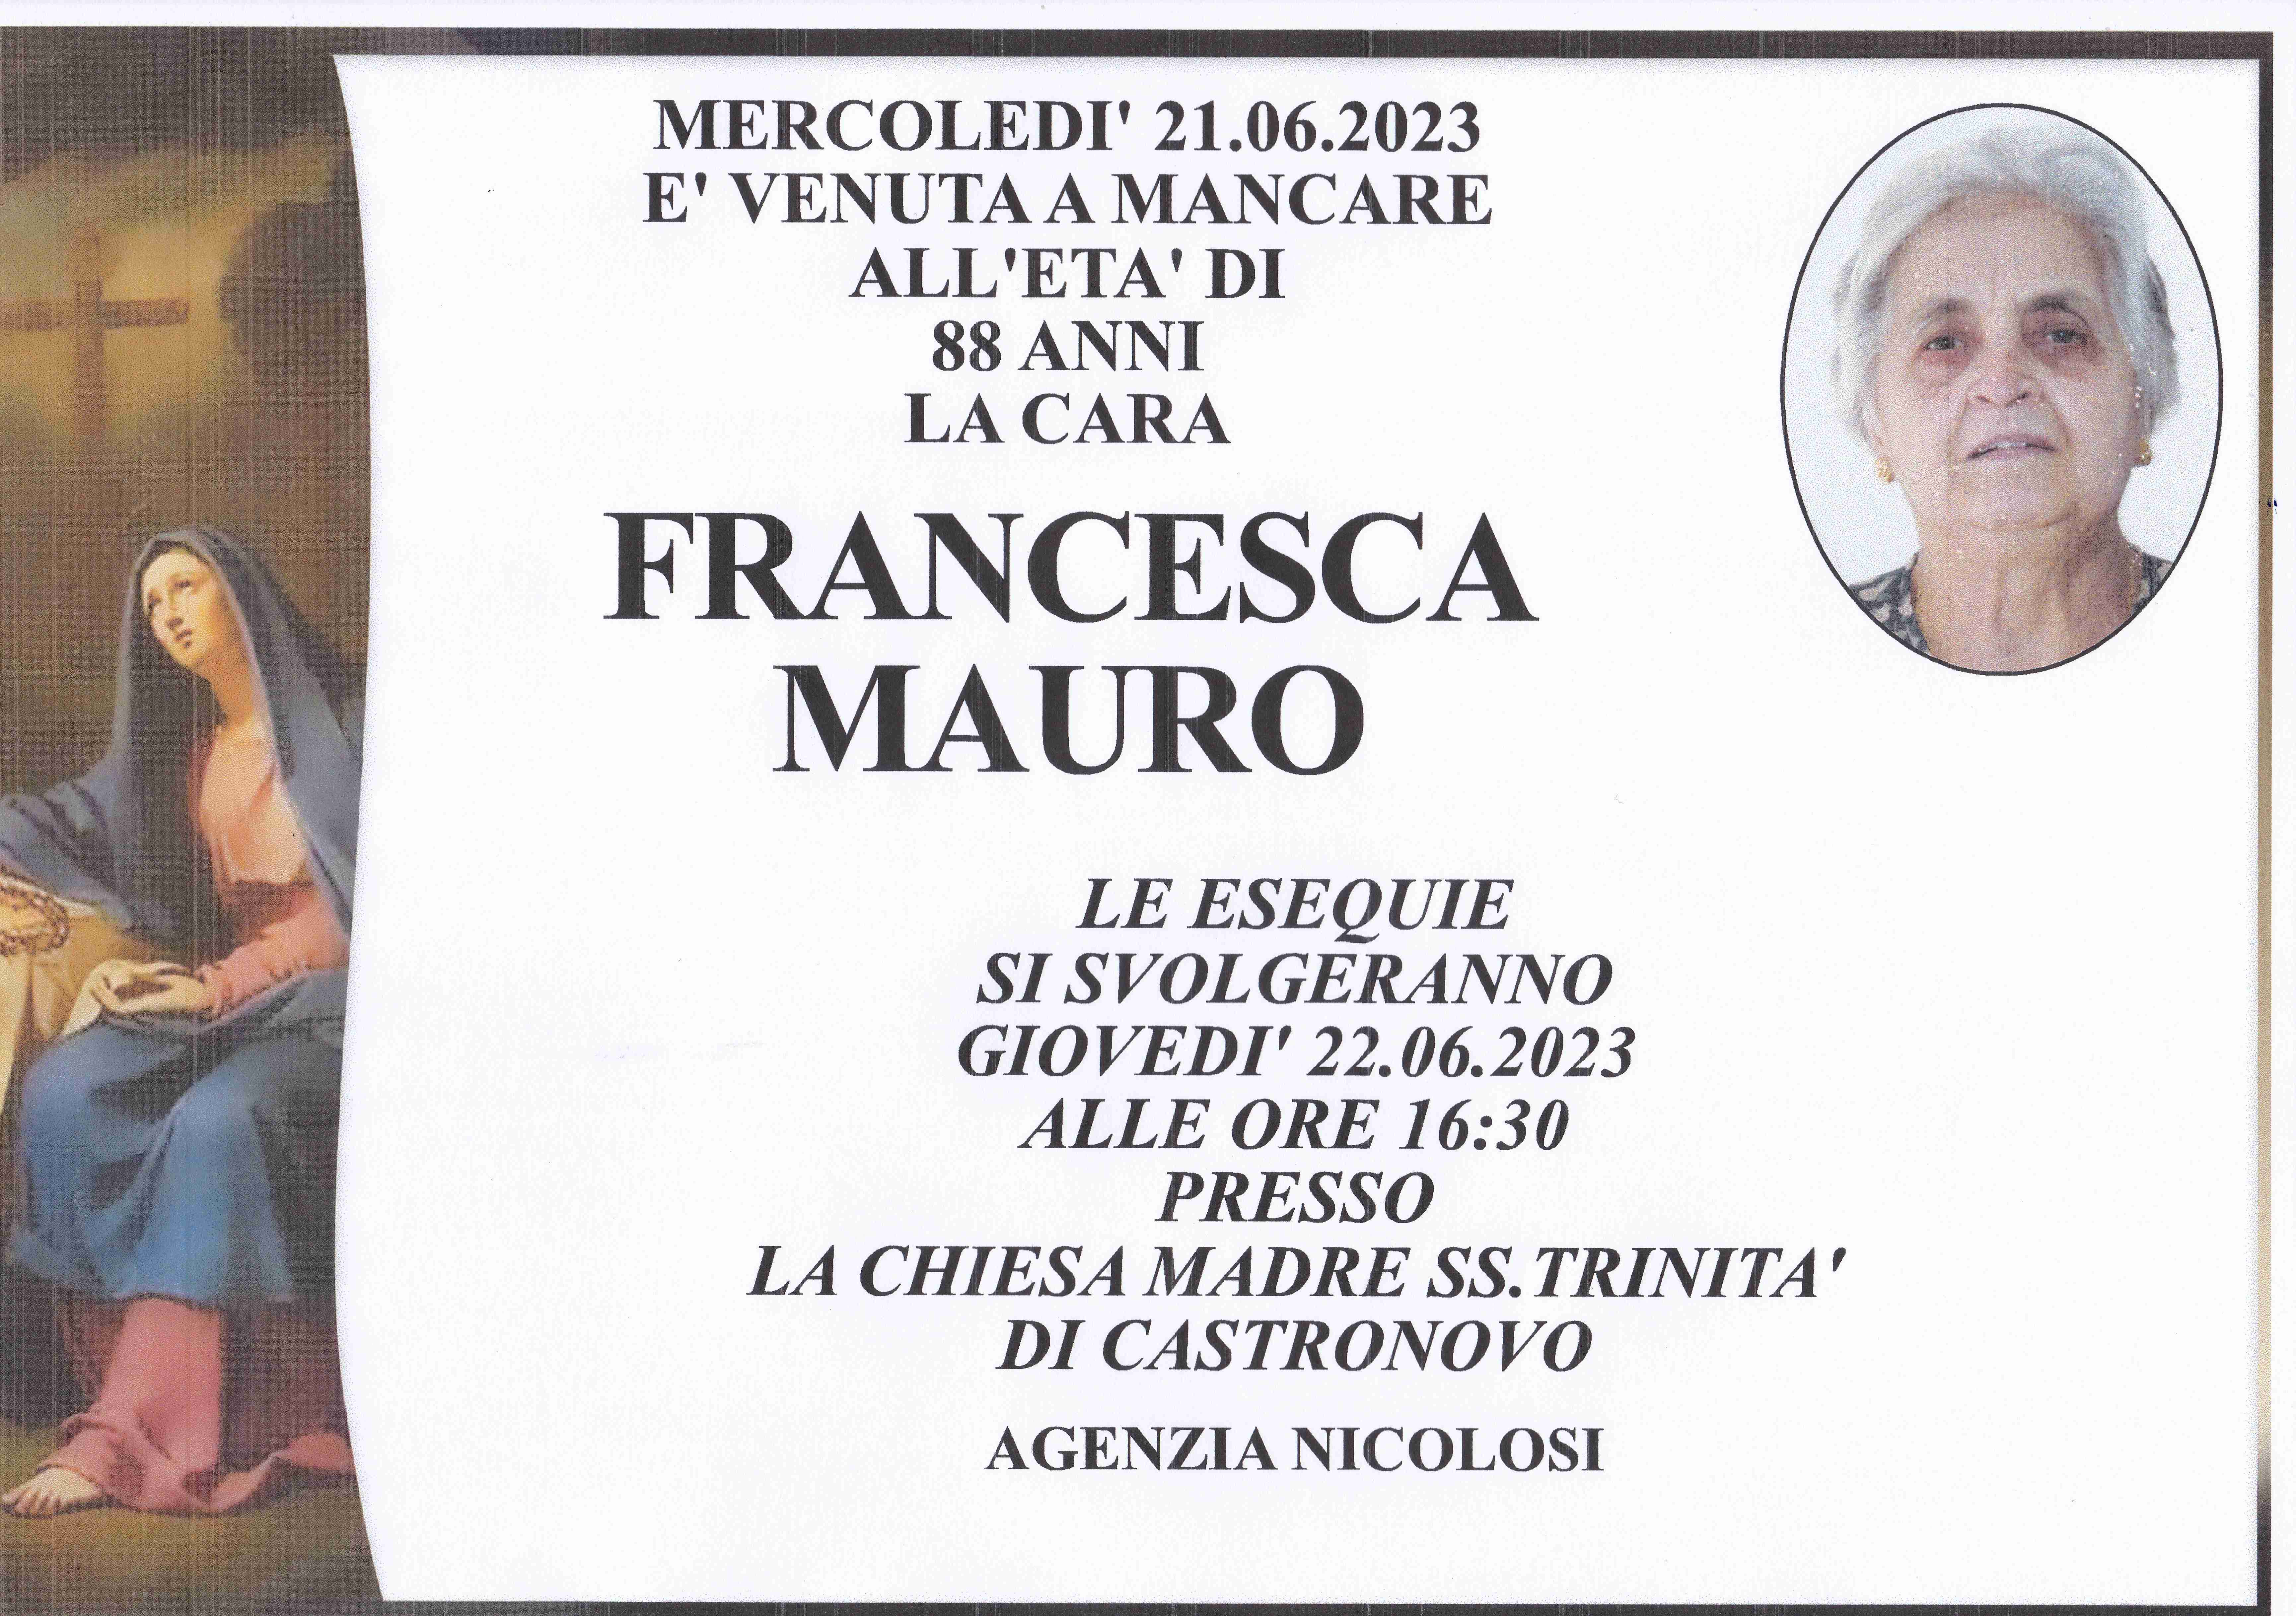 Francesca Mauro